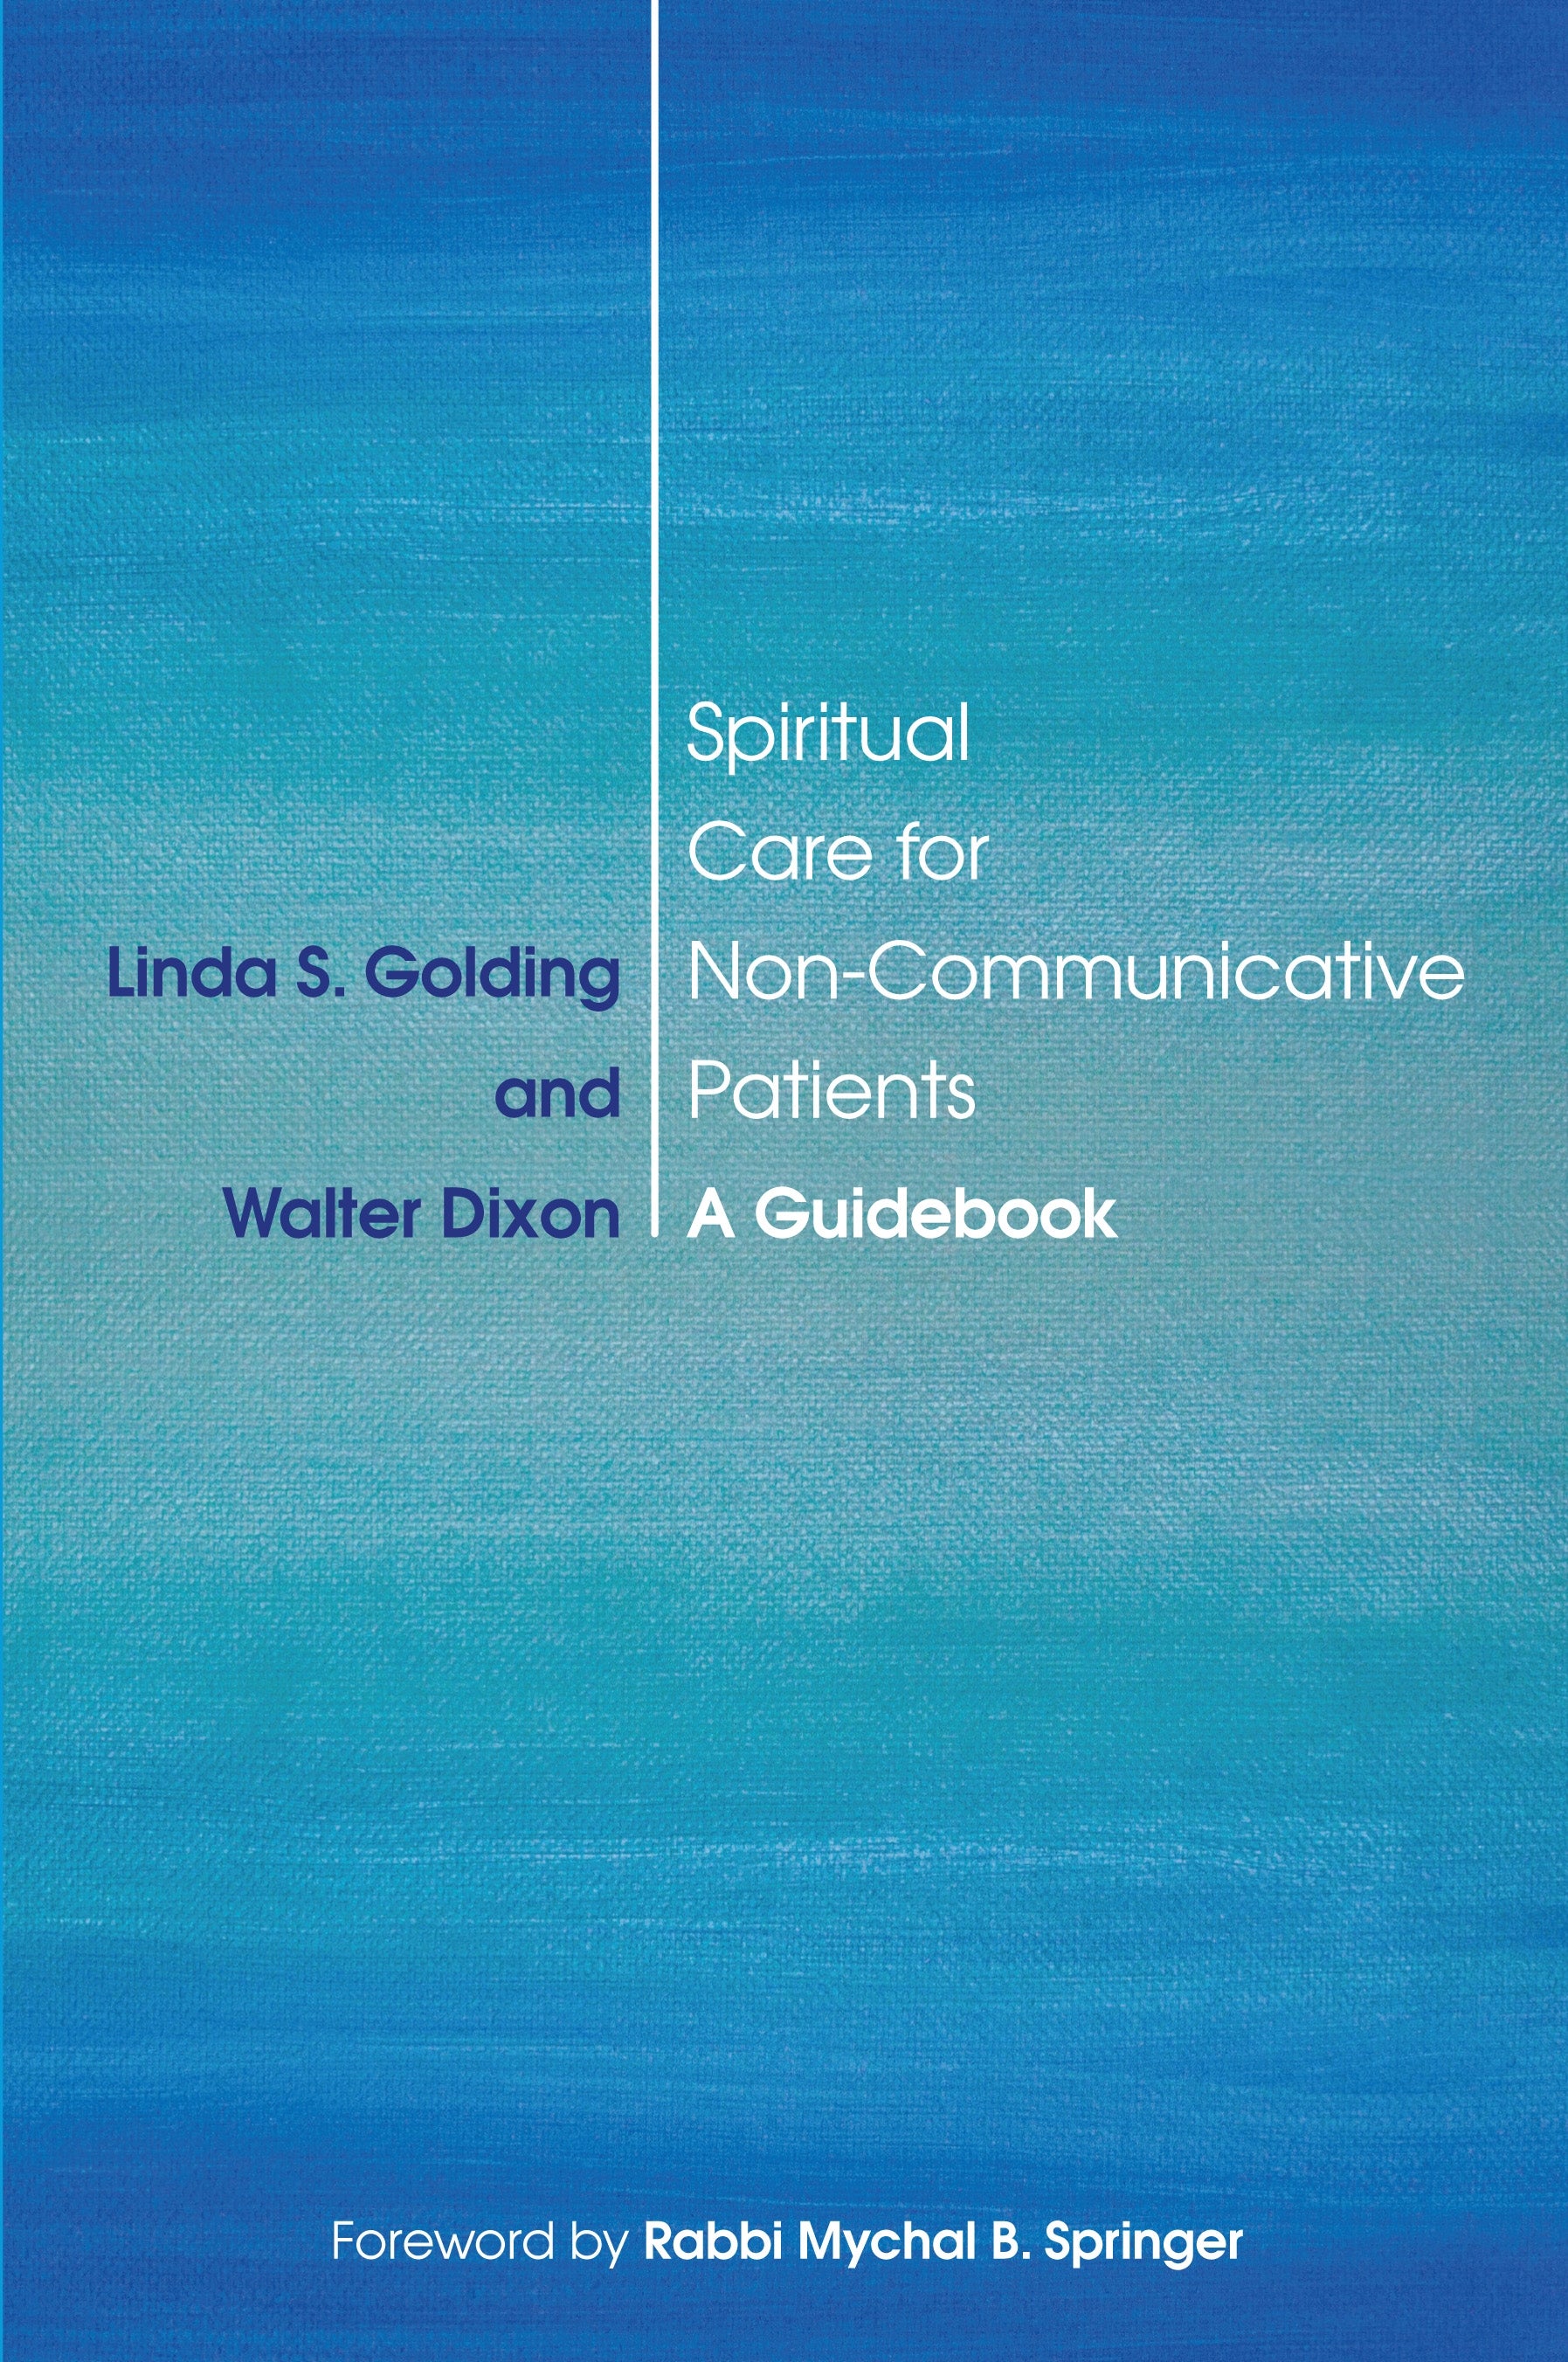 Spiritual Care for Non-Communicative Patients by Rabbi Mychal B. Springer, Walter Dixon, Linda S. Golding